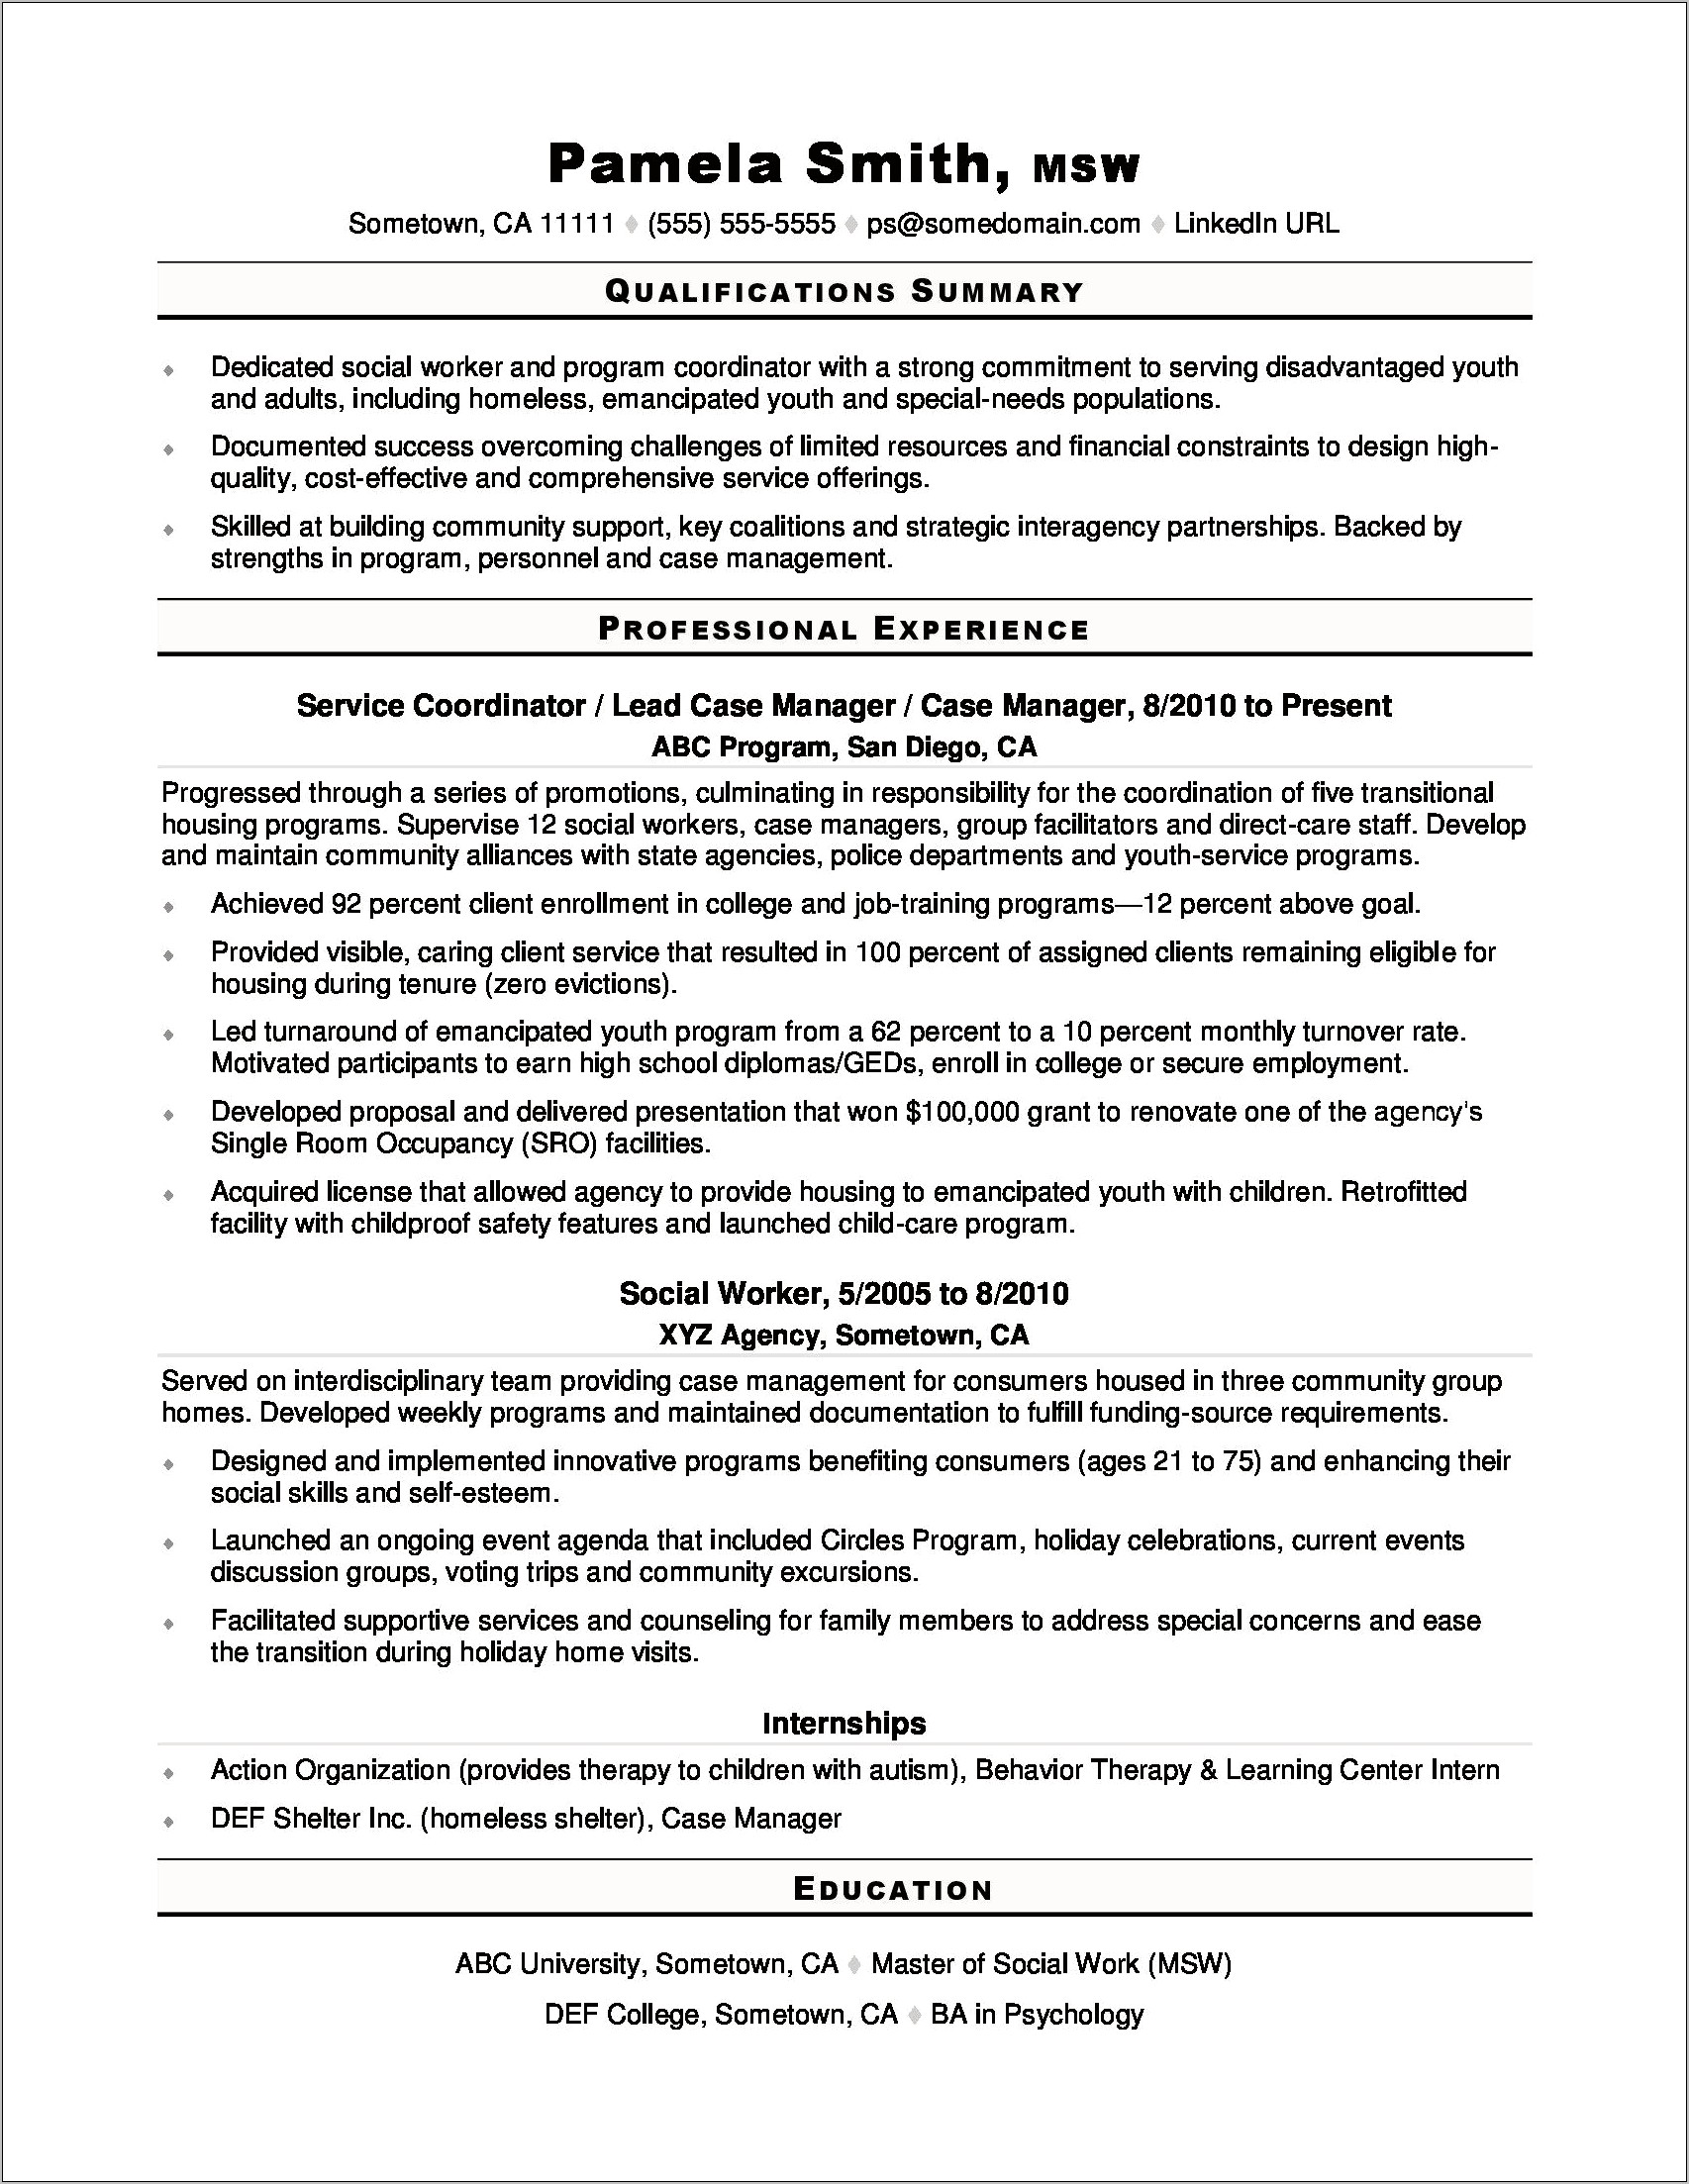 Sample Of Job Description Social Corporate Responsibility Resume